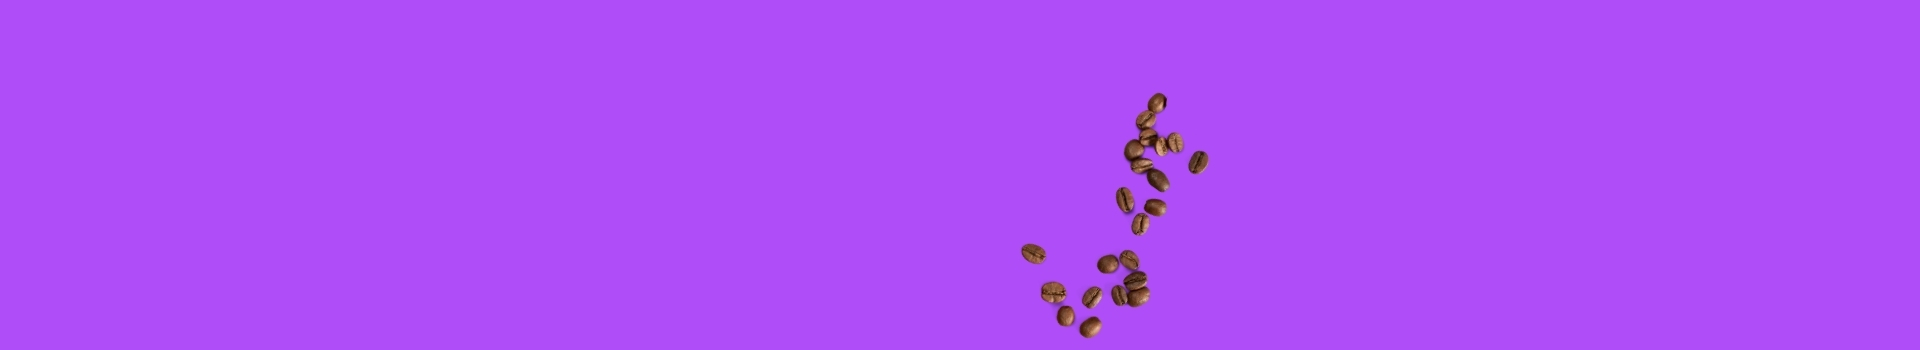 Imagen de fondo morado con granos de café